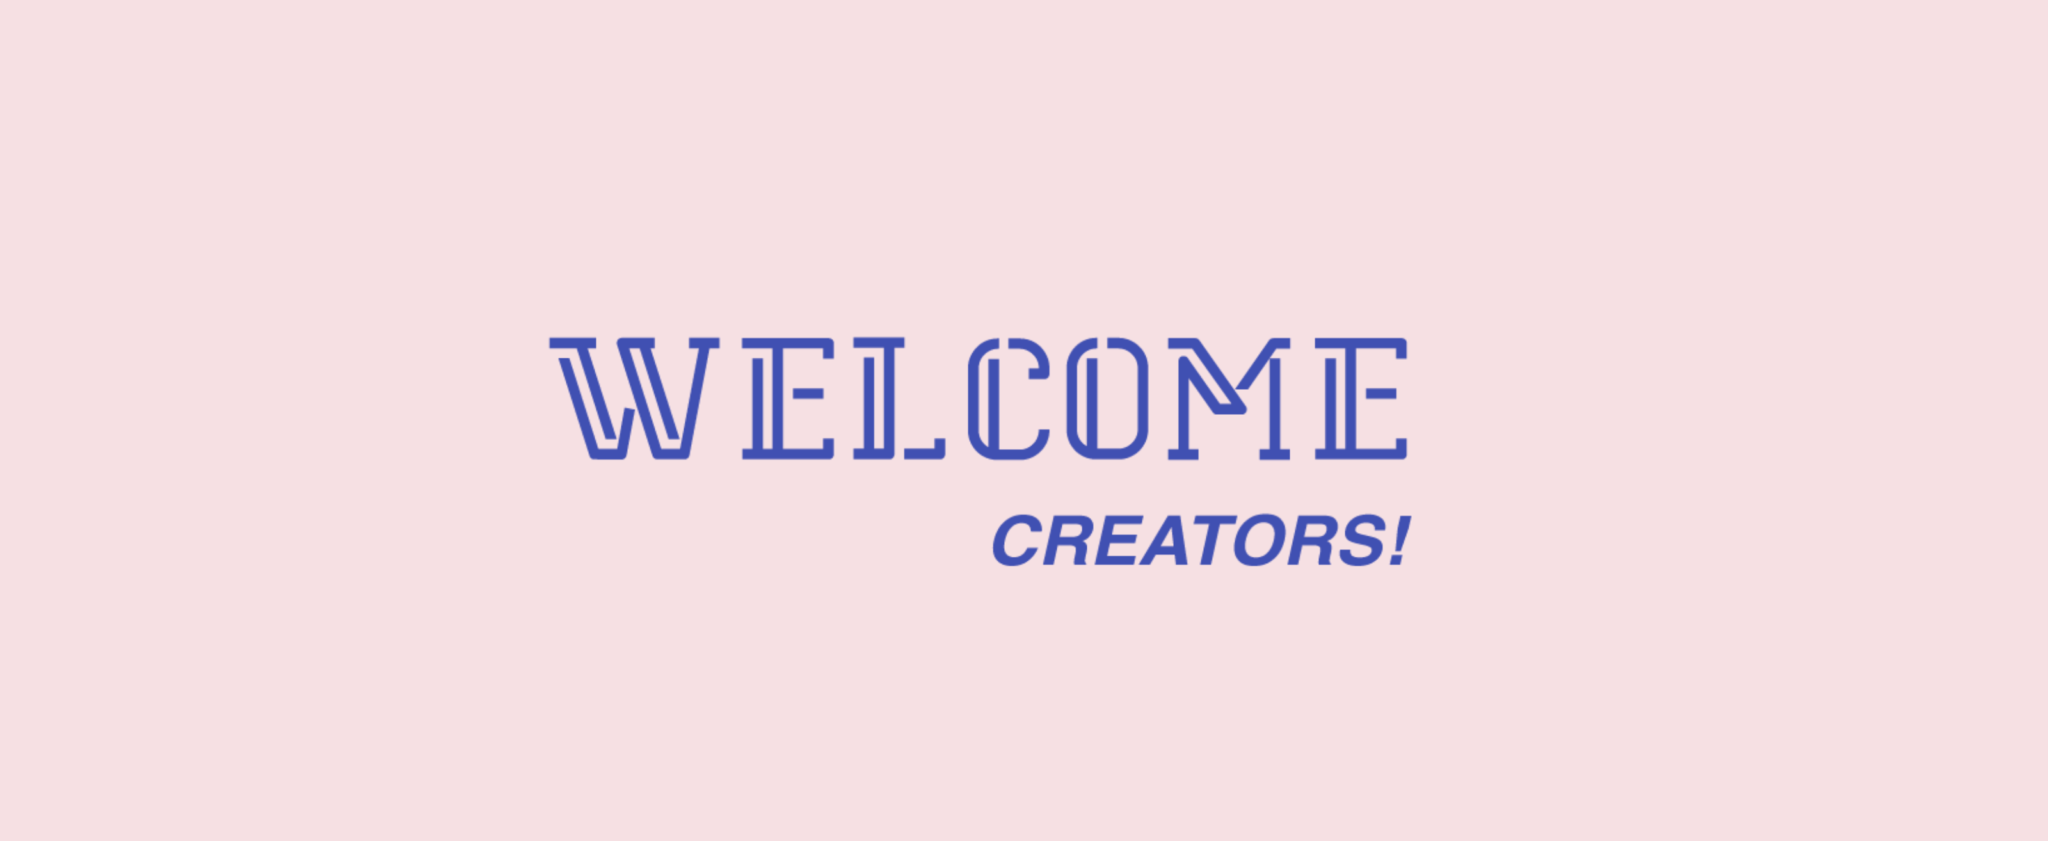 Welcome Creators